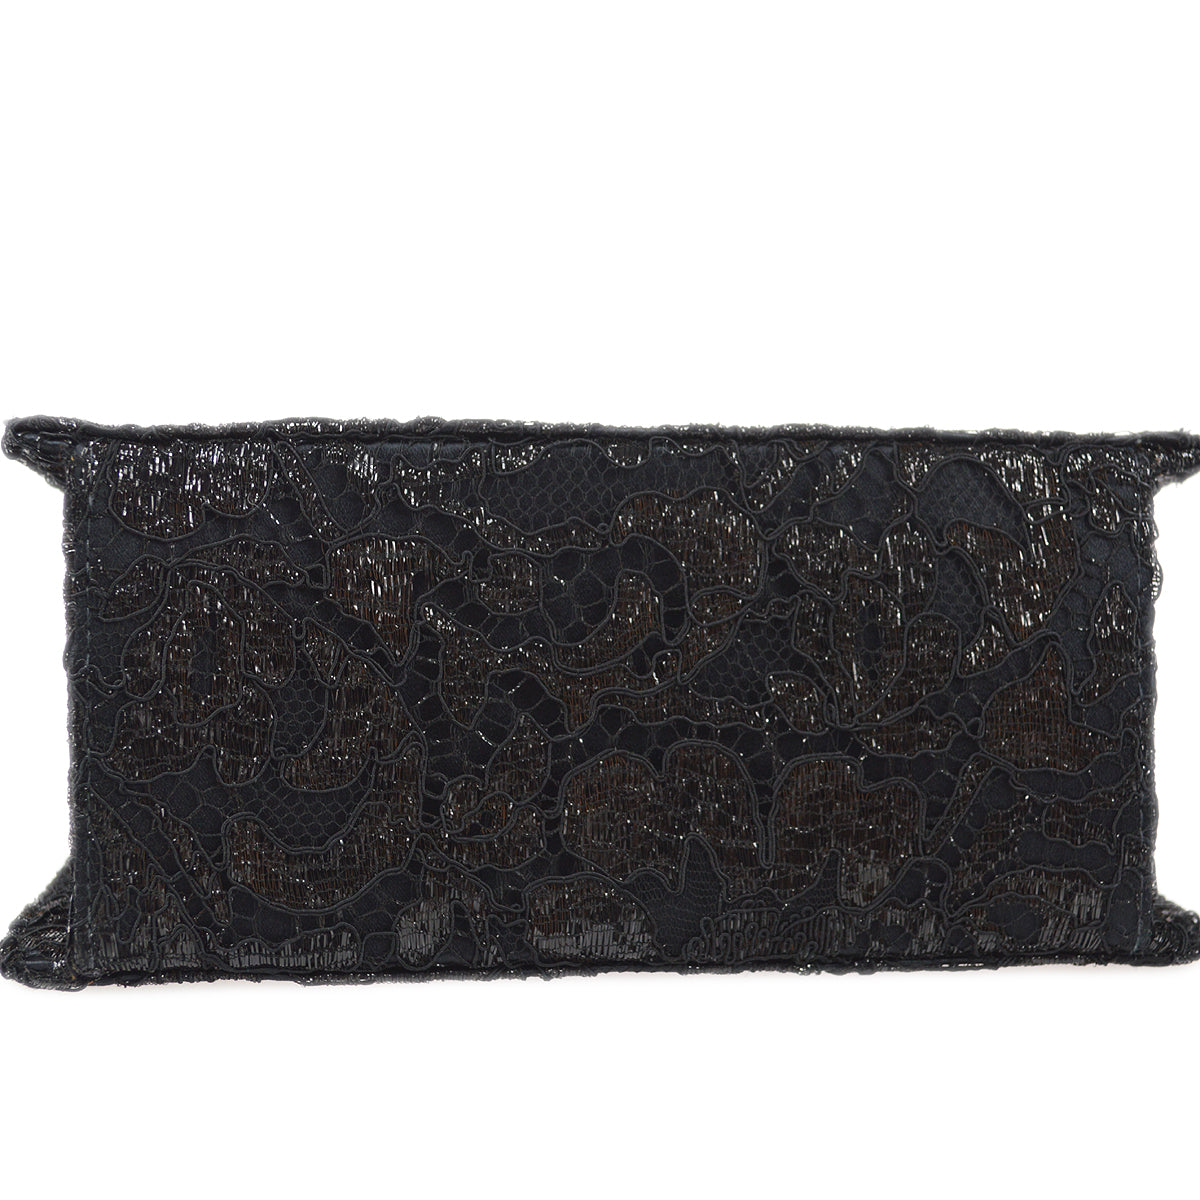 Chanel * 1997-1999 Lace Both Side Handbag Black Satin